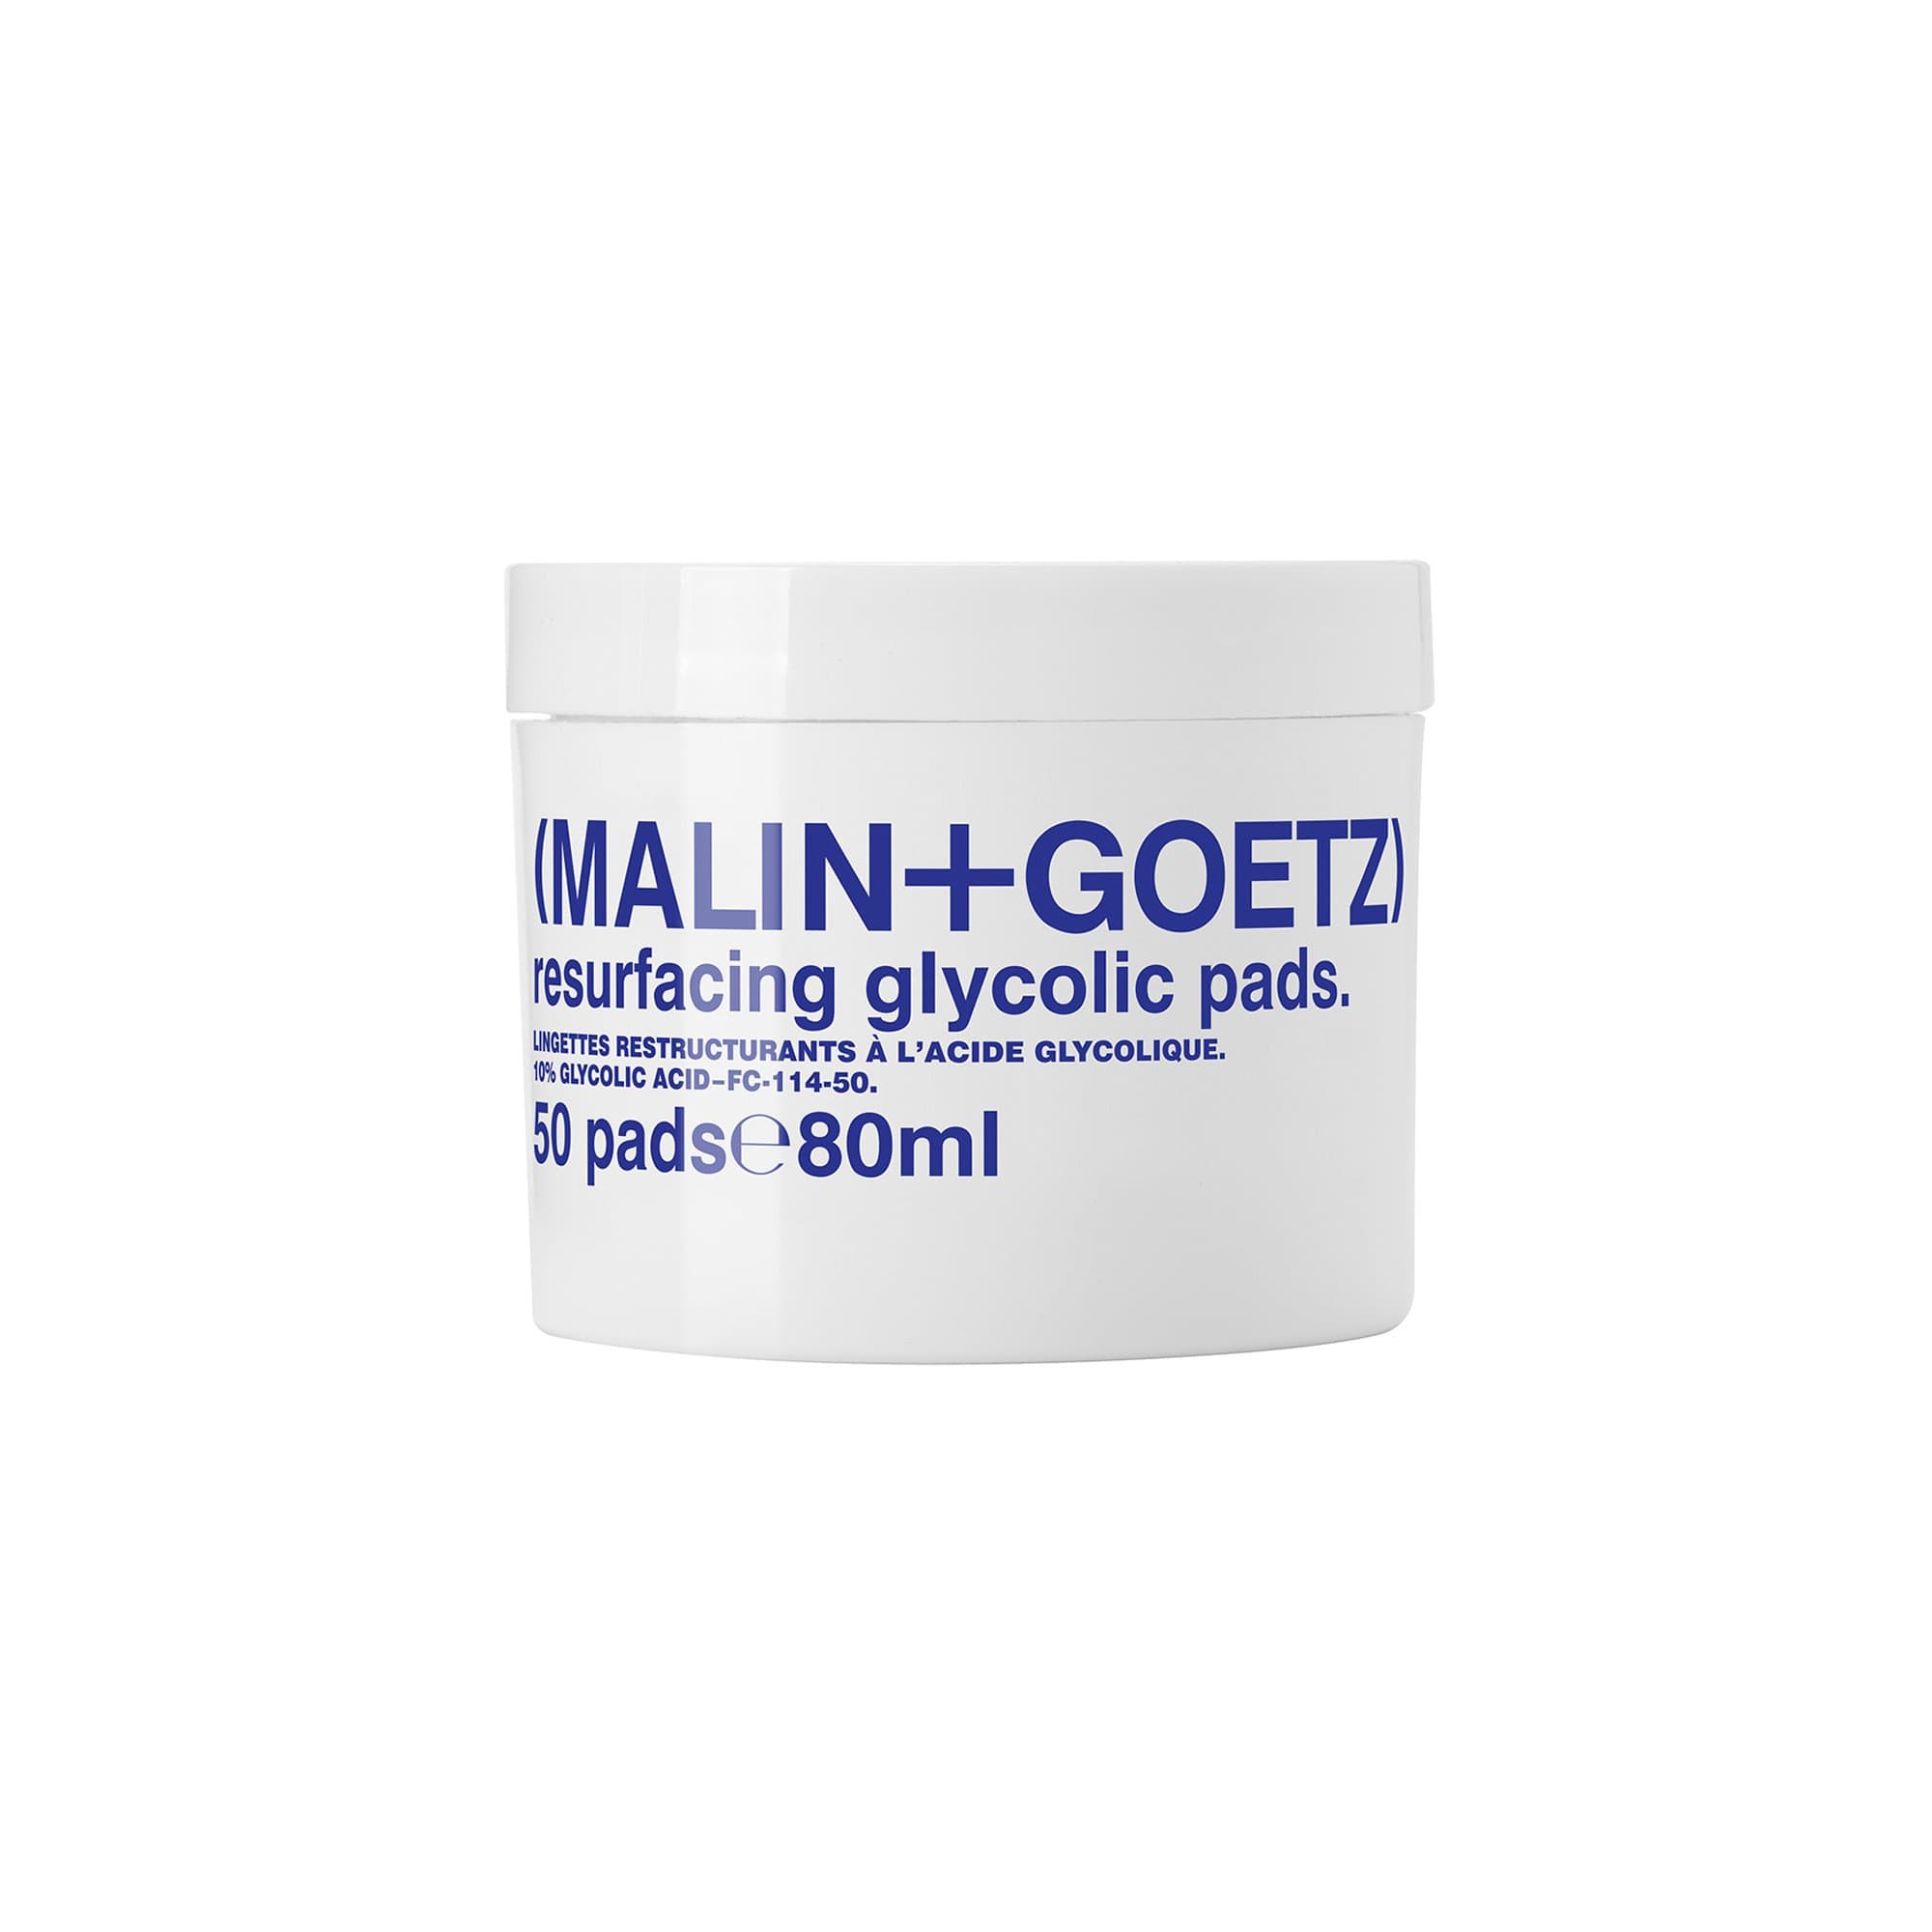 Resurfacing Glycolic Pads de (MALIN+GOETZ) Discos de algodón de ácido glicólico